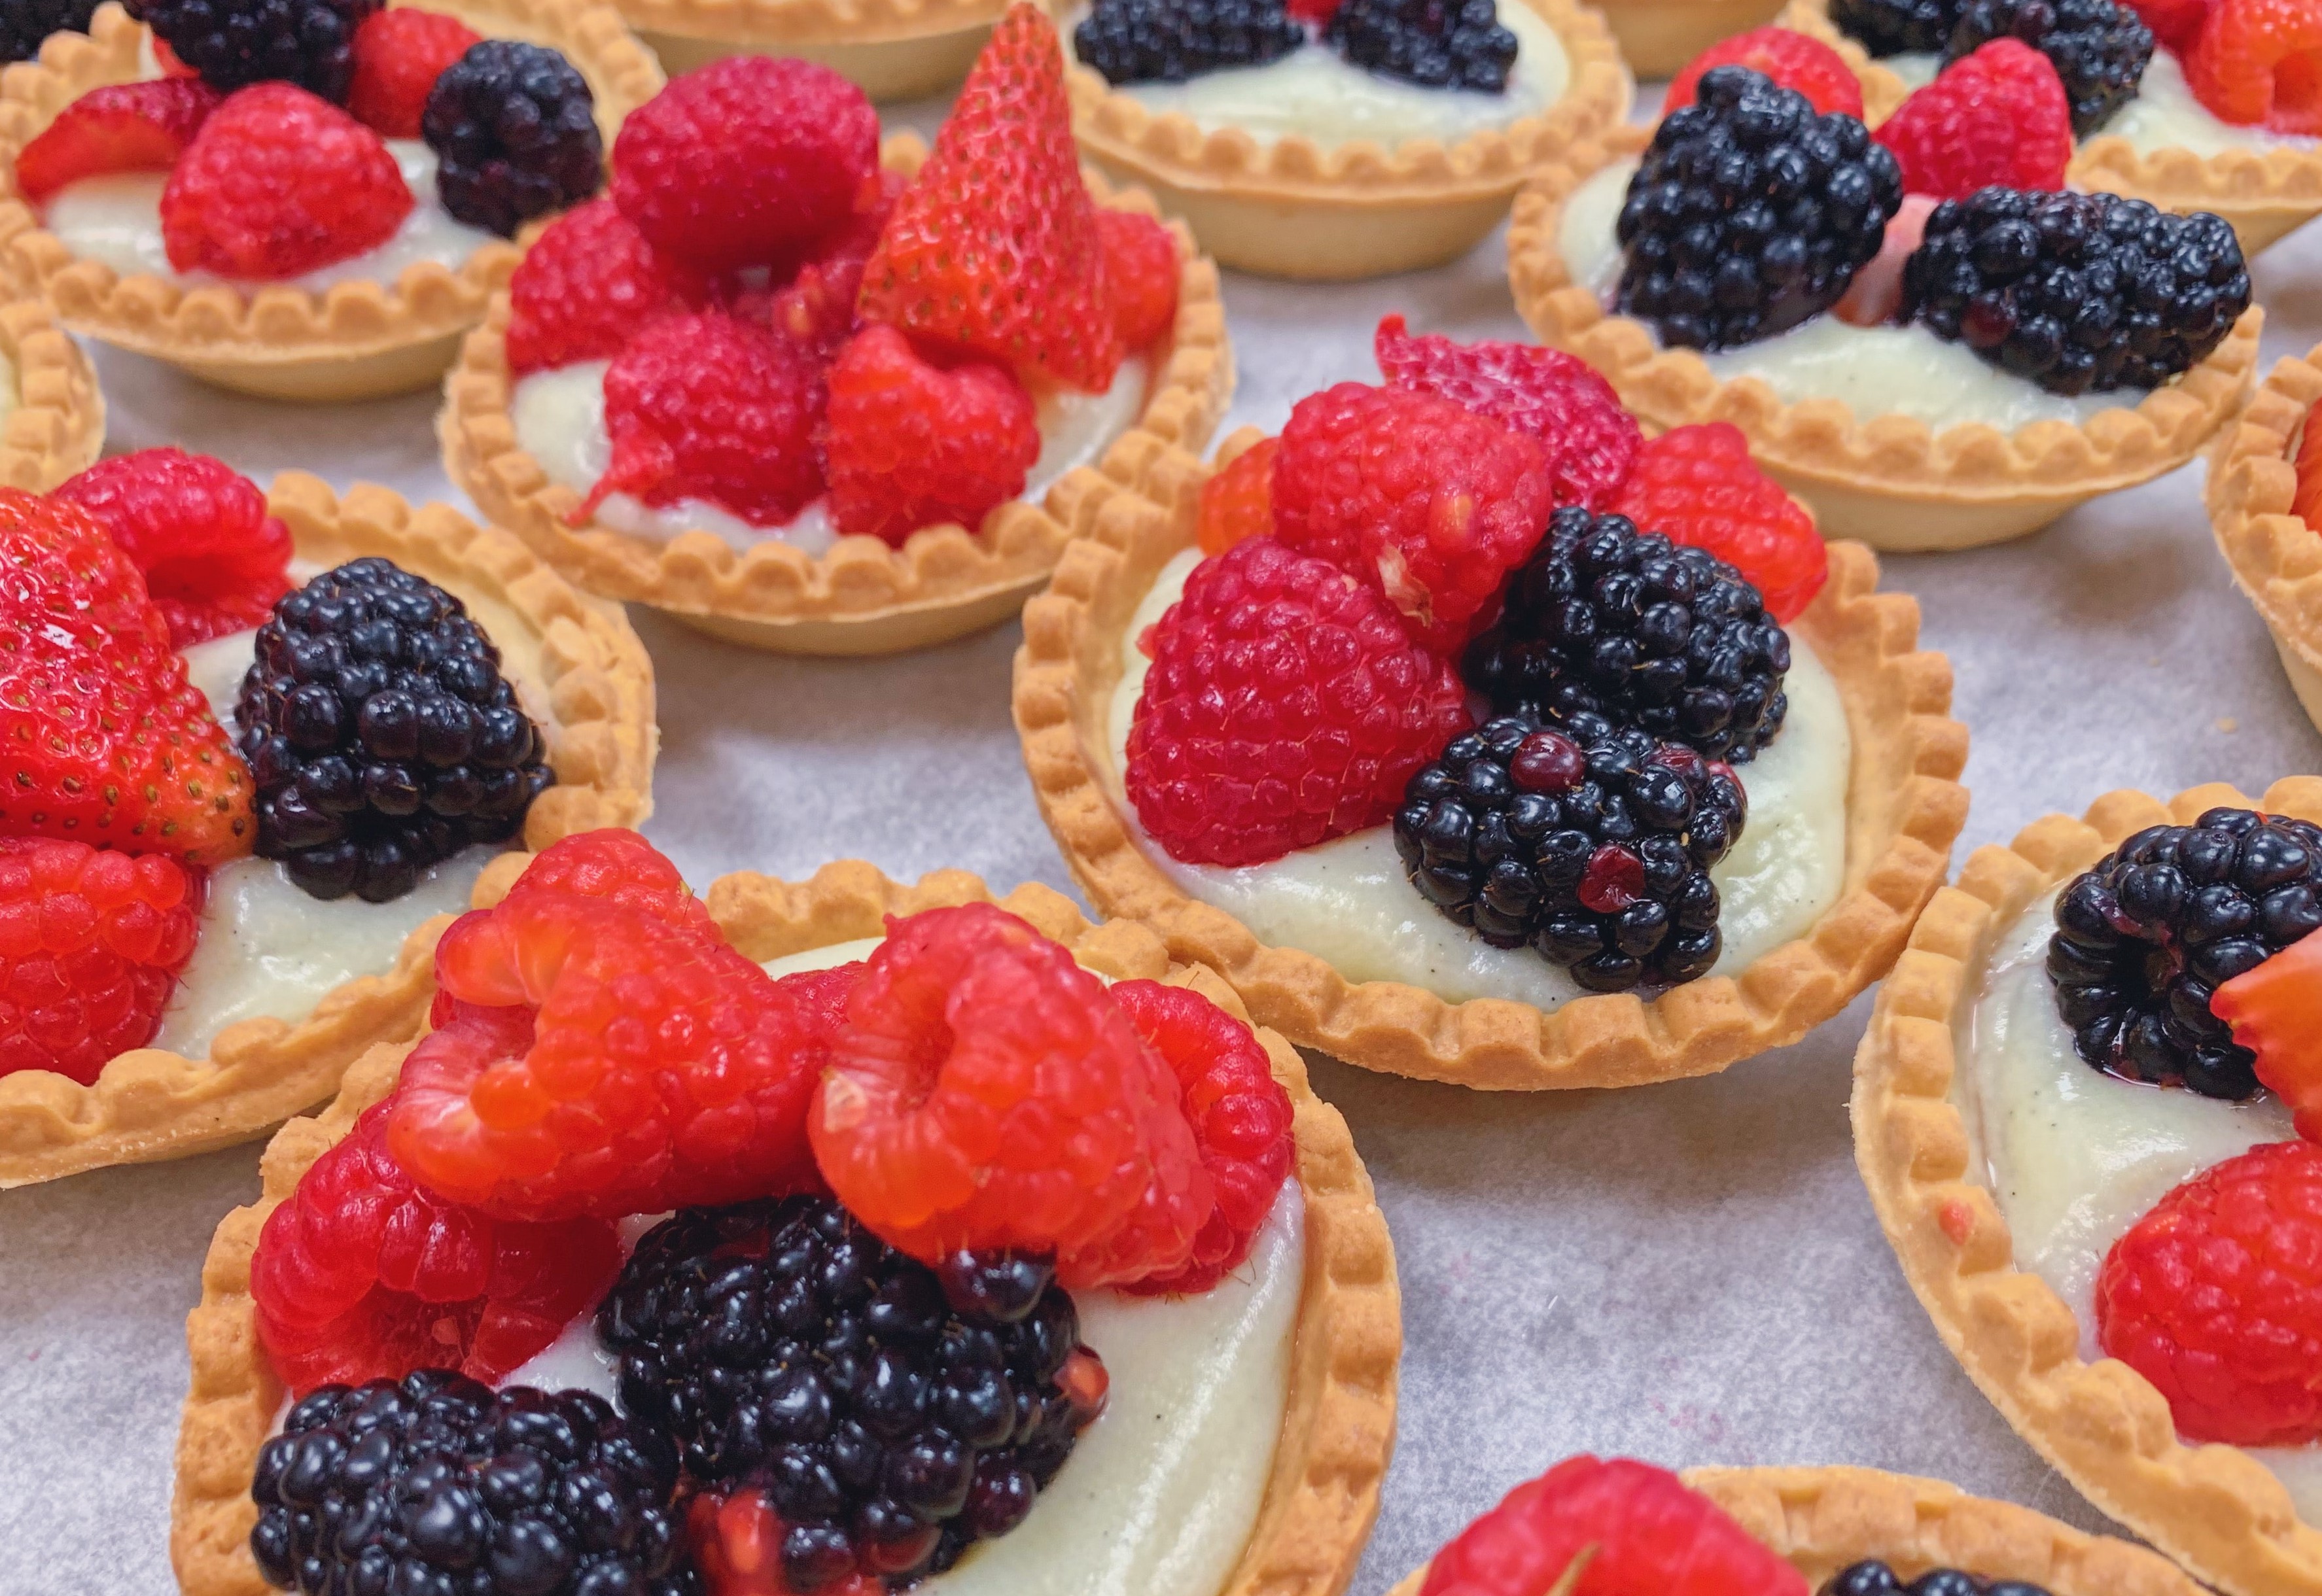 Best Wedding Dates - serve pie varieties to celebrate Pi Day